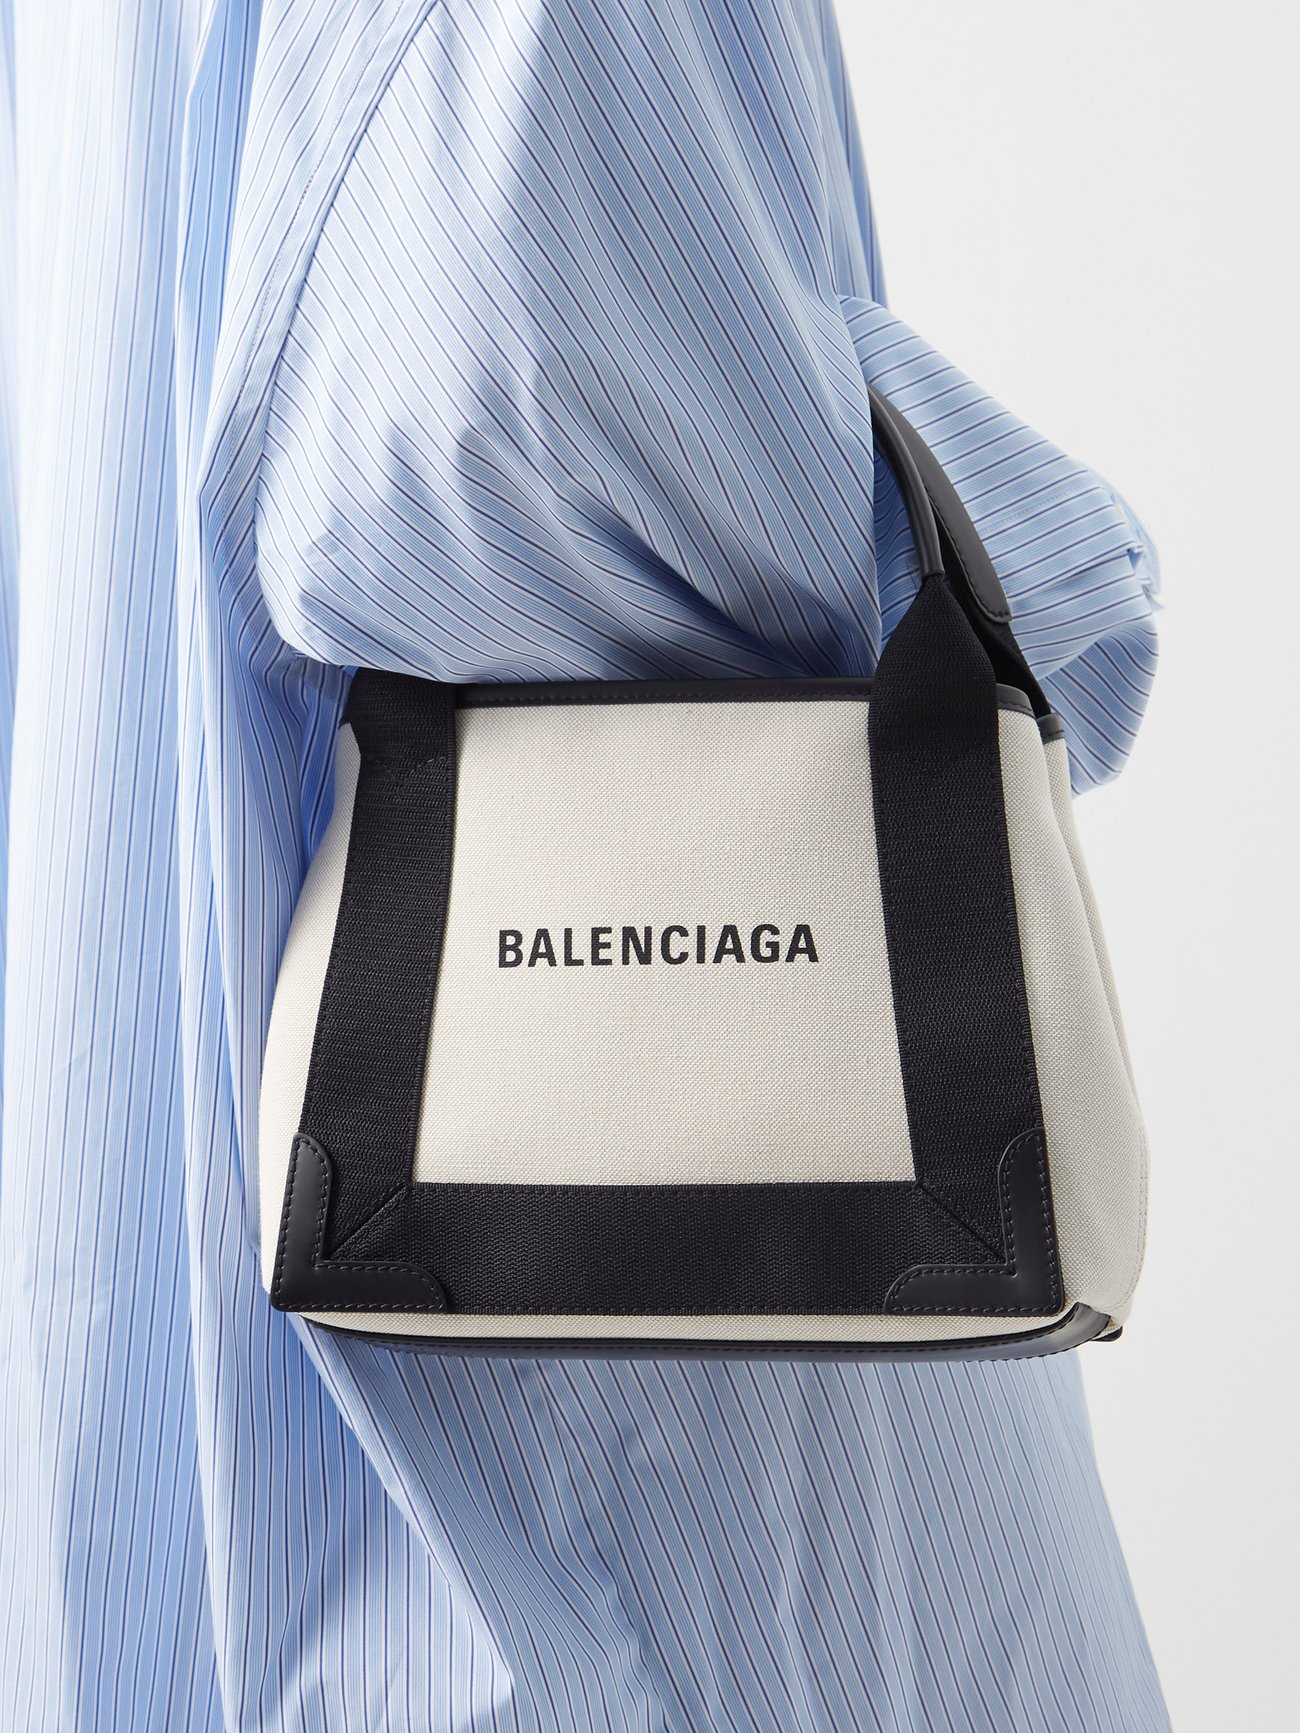 Giant City mini cross-body bag, Balenciaga, MATCHESFASHION.COM